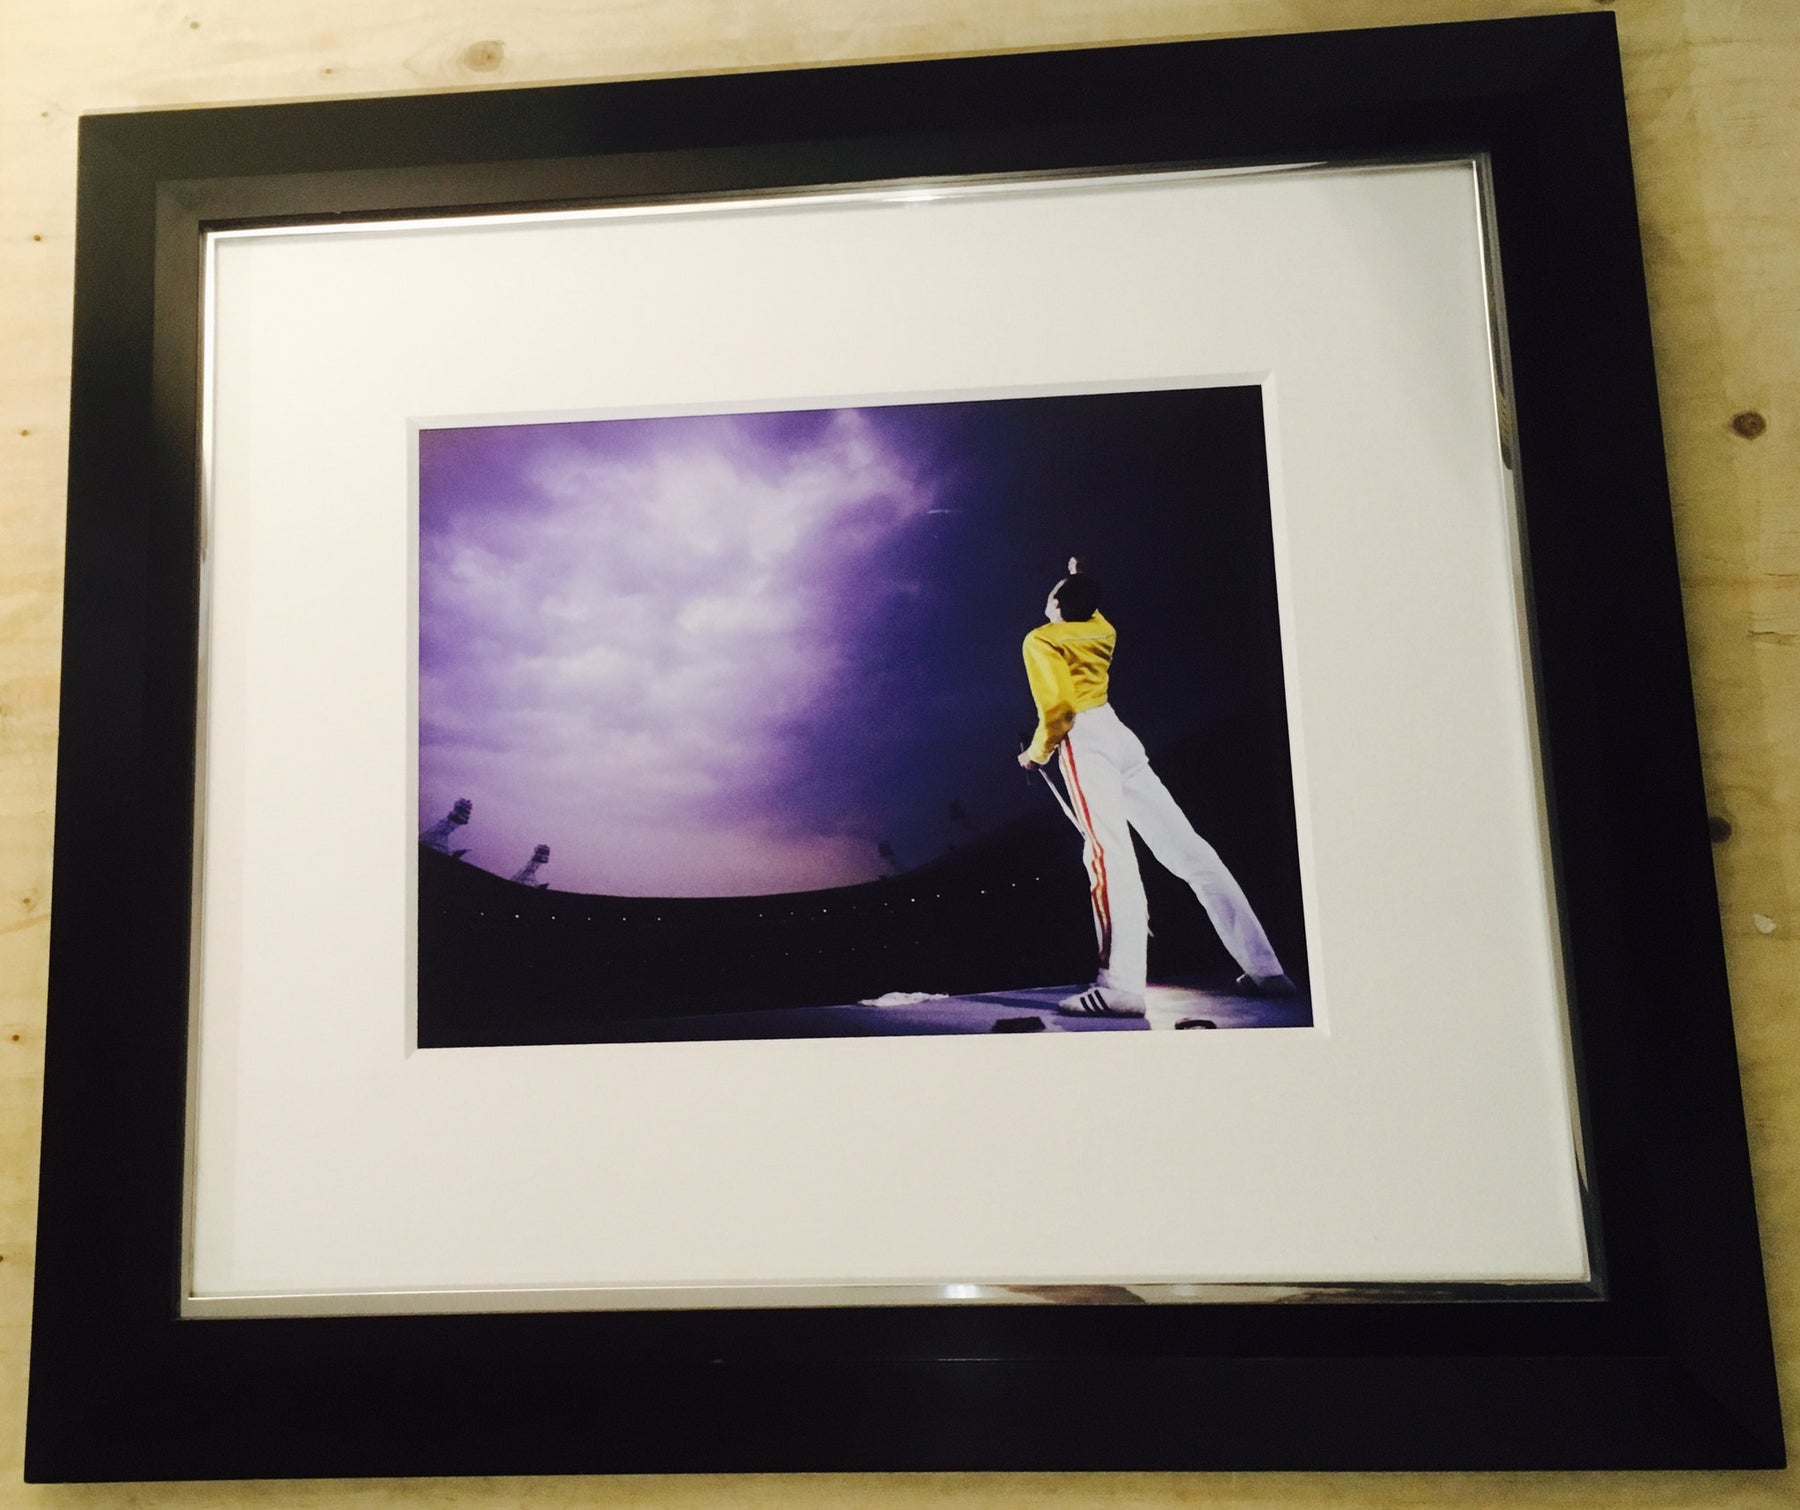 Freddie Mercury/Queen by Denis O'Regan